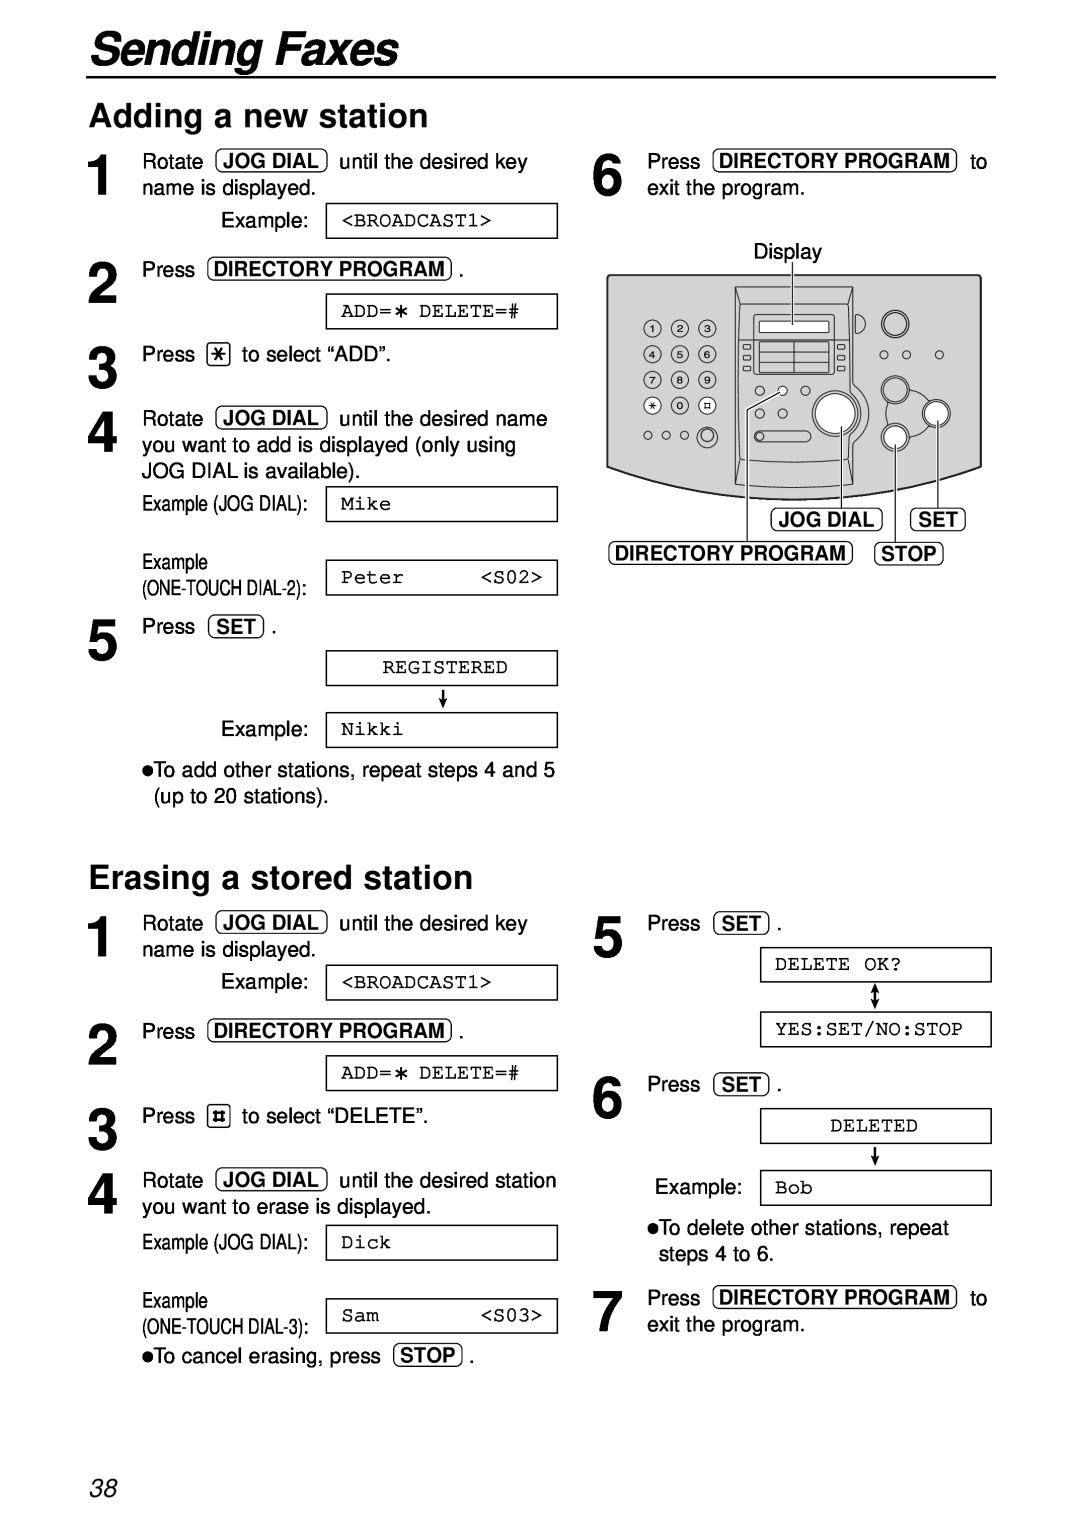 Panasonic KX-FL501 manual Adding a new station, Erasing a stored station, Sending Faxes, Jog Dial, Directory Program, Stop 